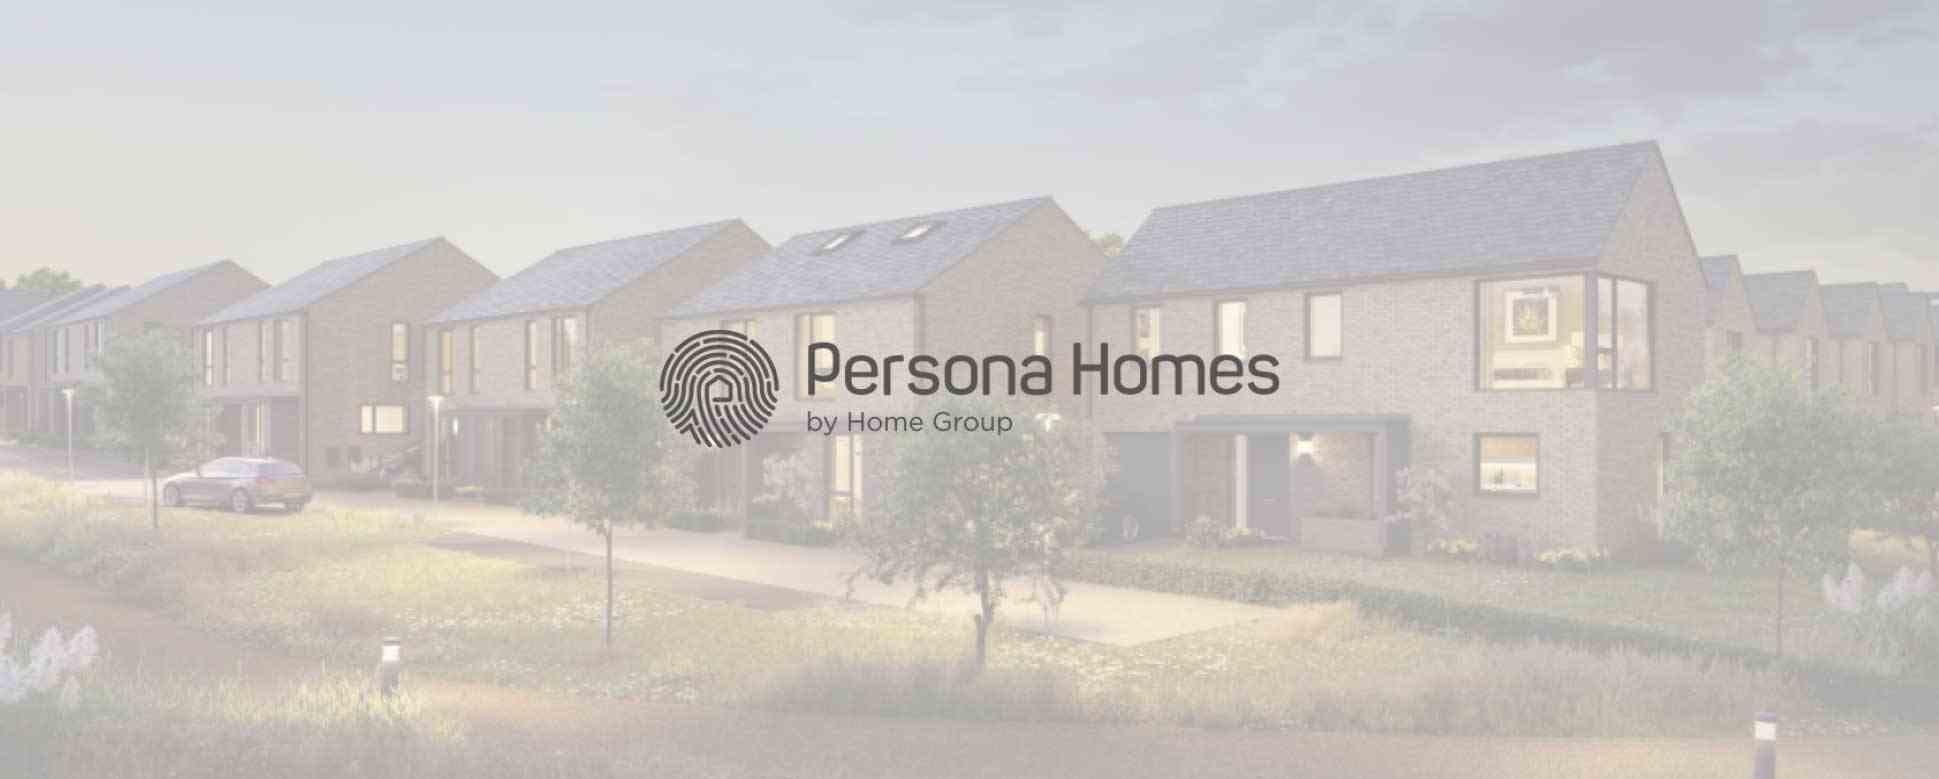 Meet the Developer – Persona Homes